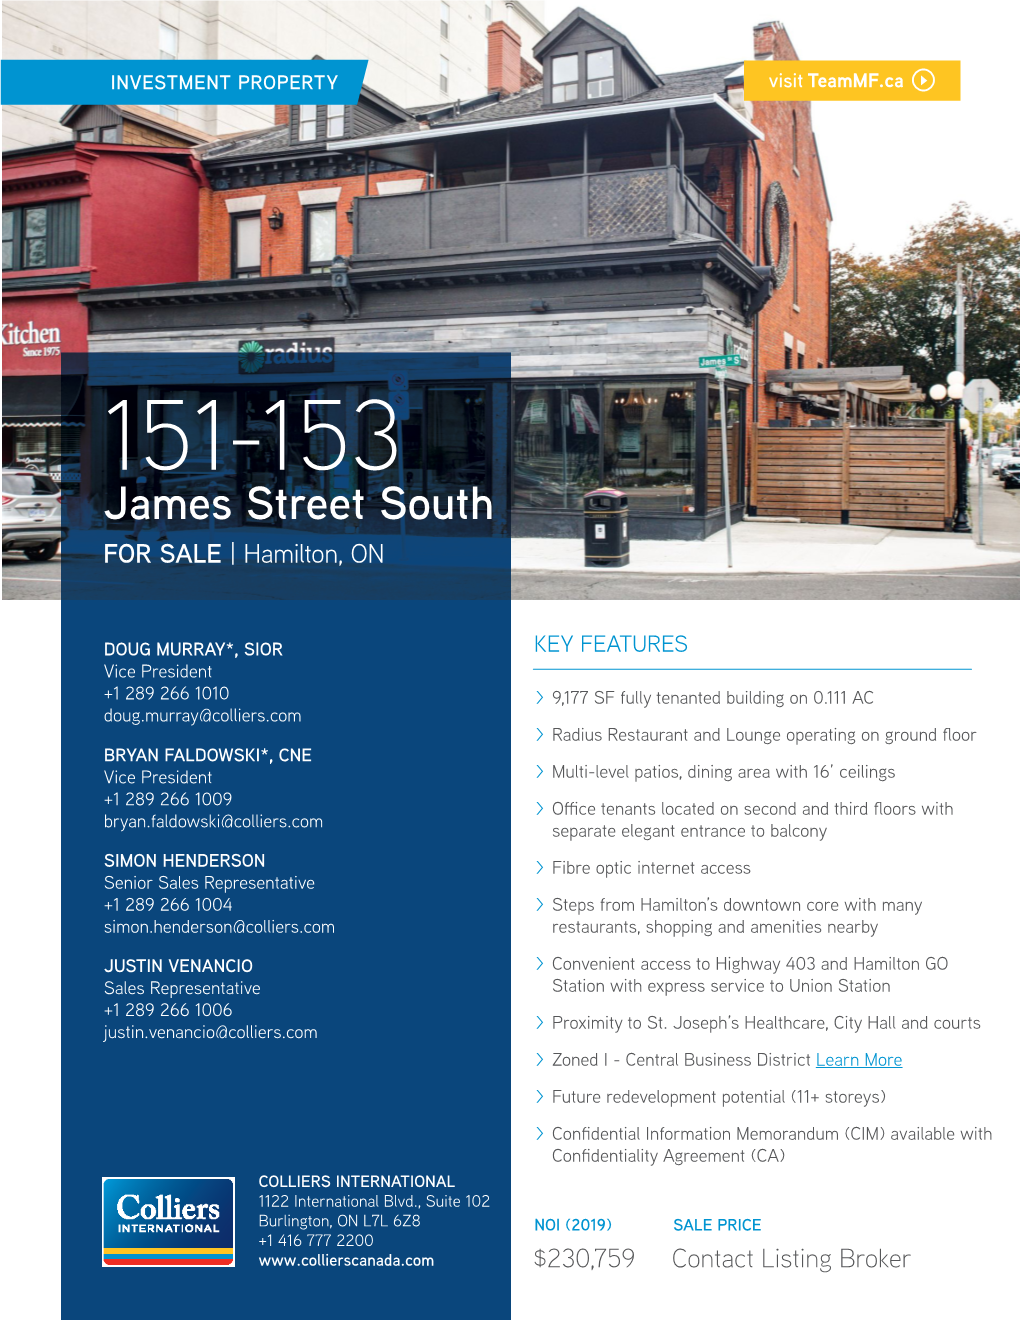 James Street South for SALE | Hamilton, ON